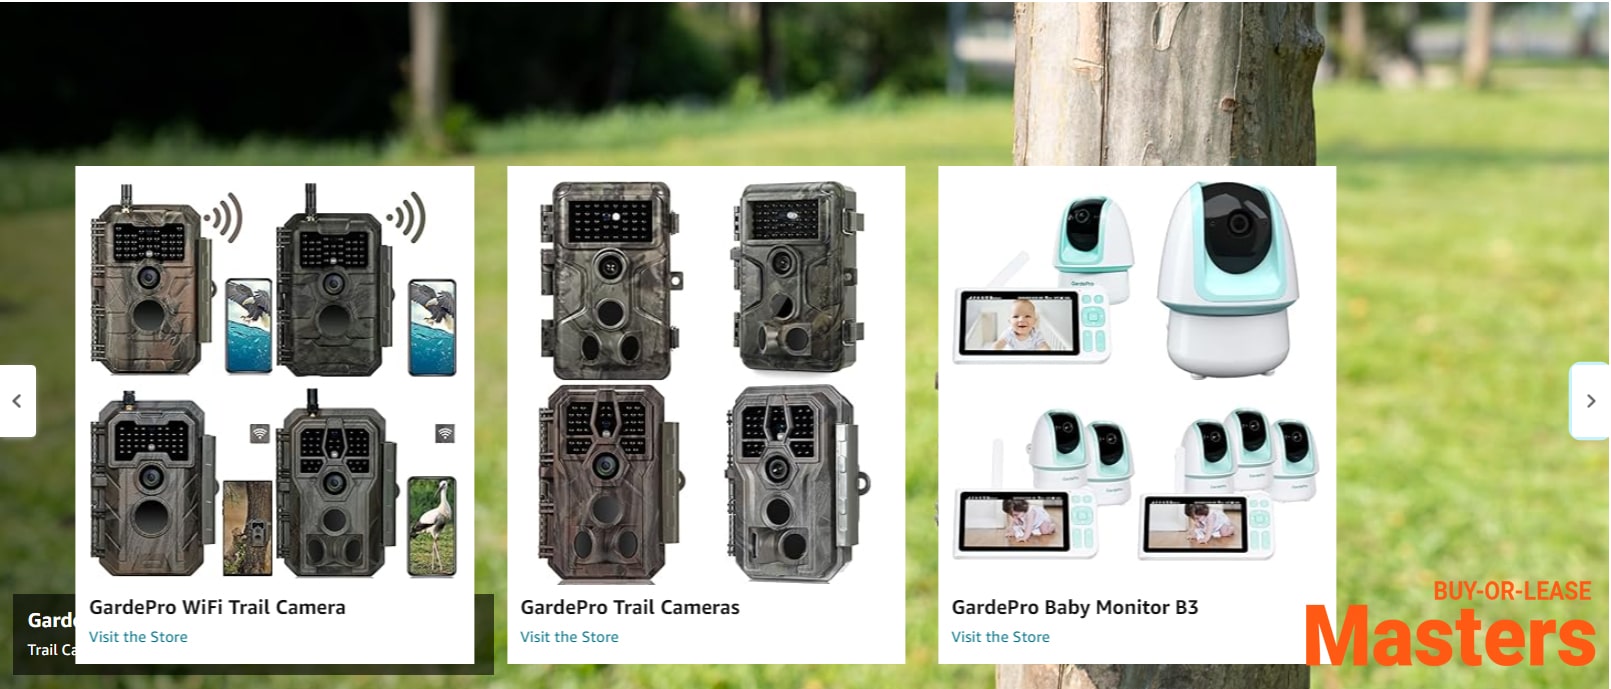 gardepro-e6-trail-camera-wifi-image (4)